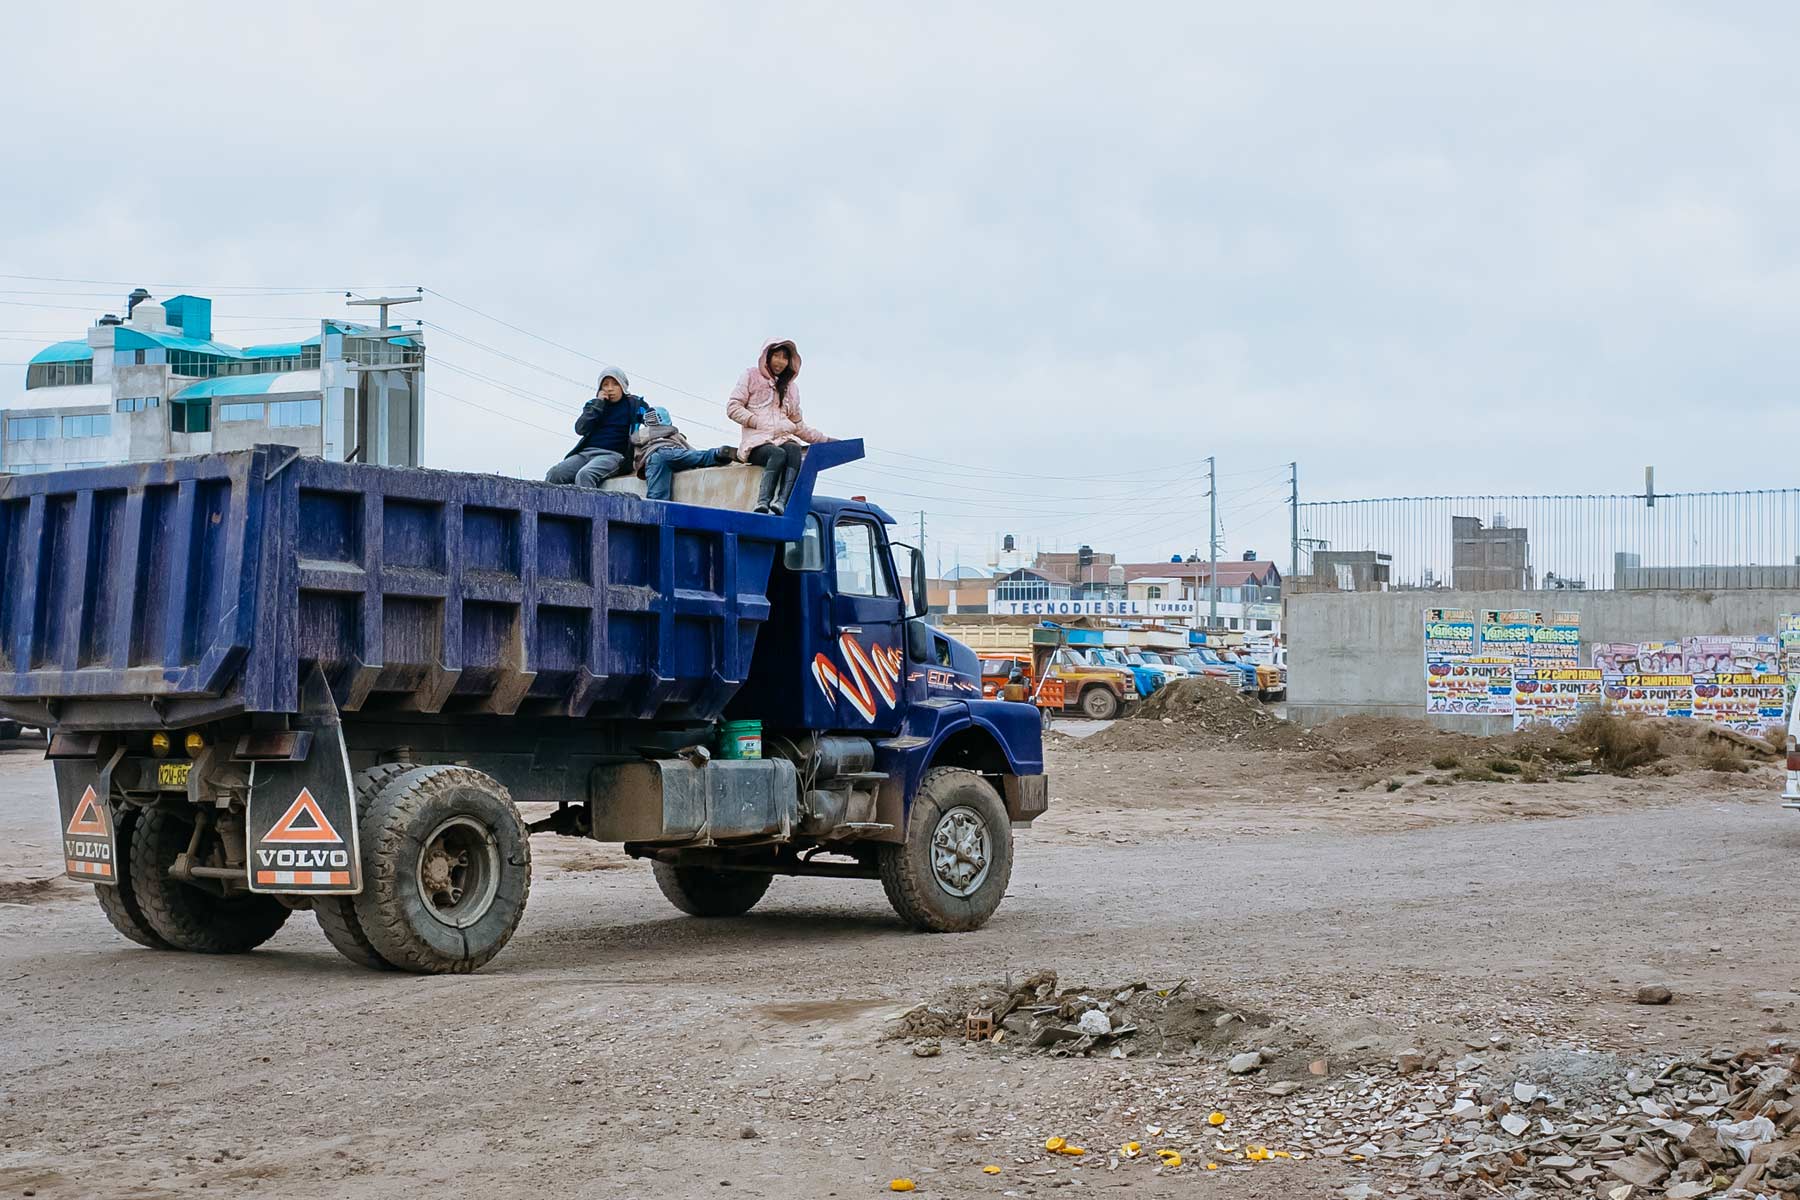 Three children riding on the back of a mining dump truck in Juliaca.